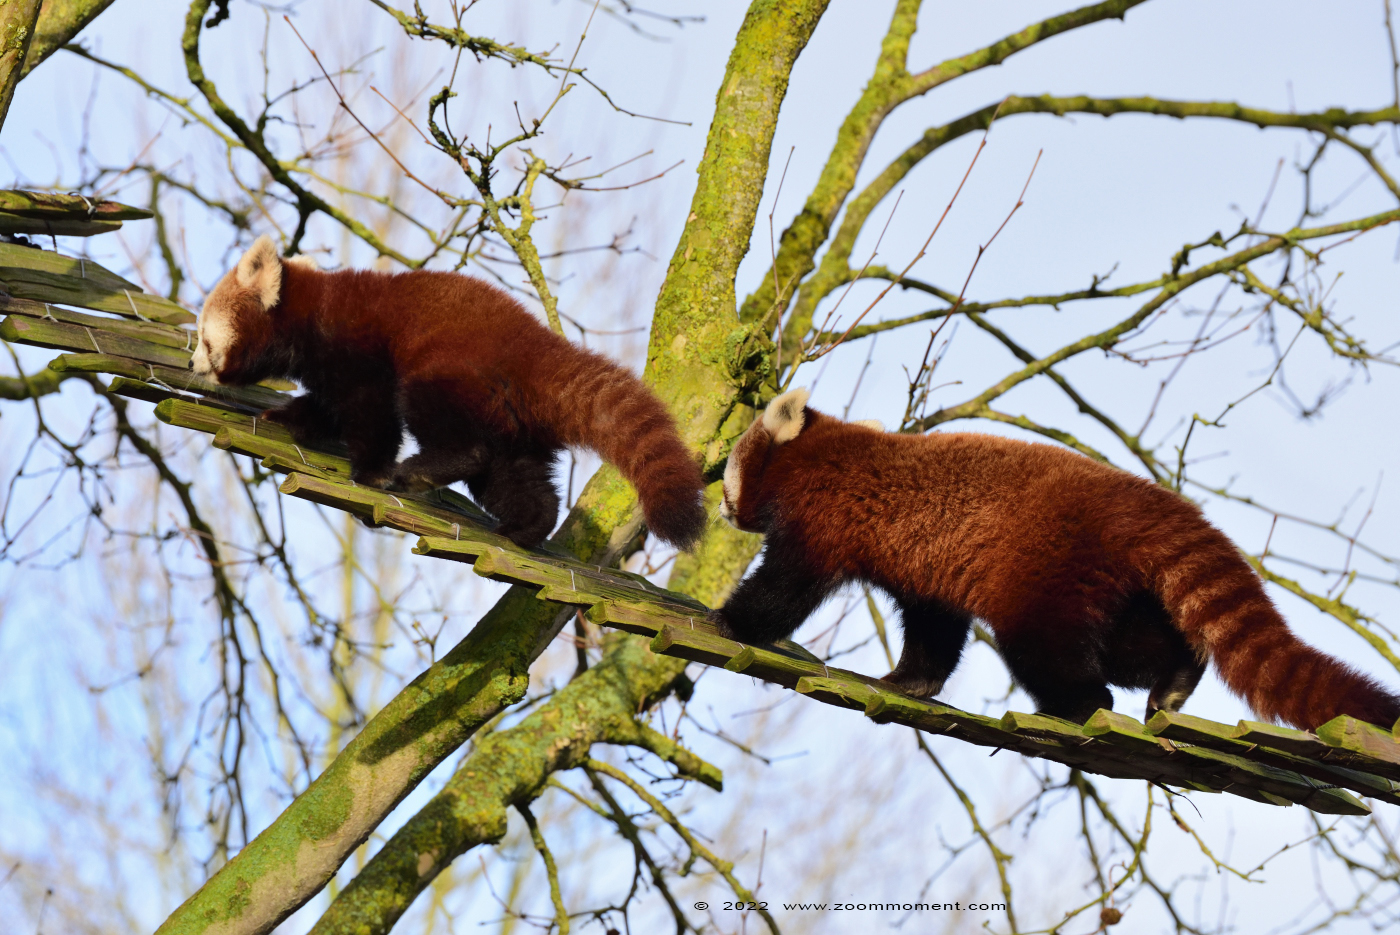 rode of kleine panda ( Ailurus fulgens ) lesser or red panda
キーワード: Overloon zooparc Nederland rode kleine panda Ailurus fulgens lesser red panda